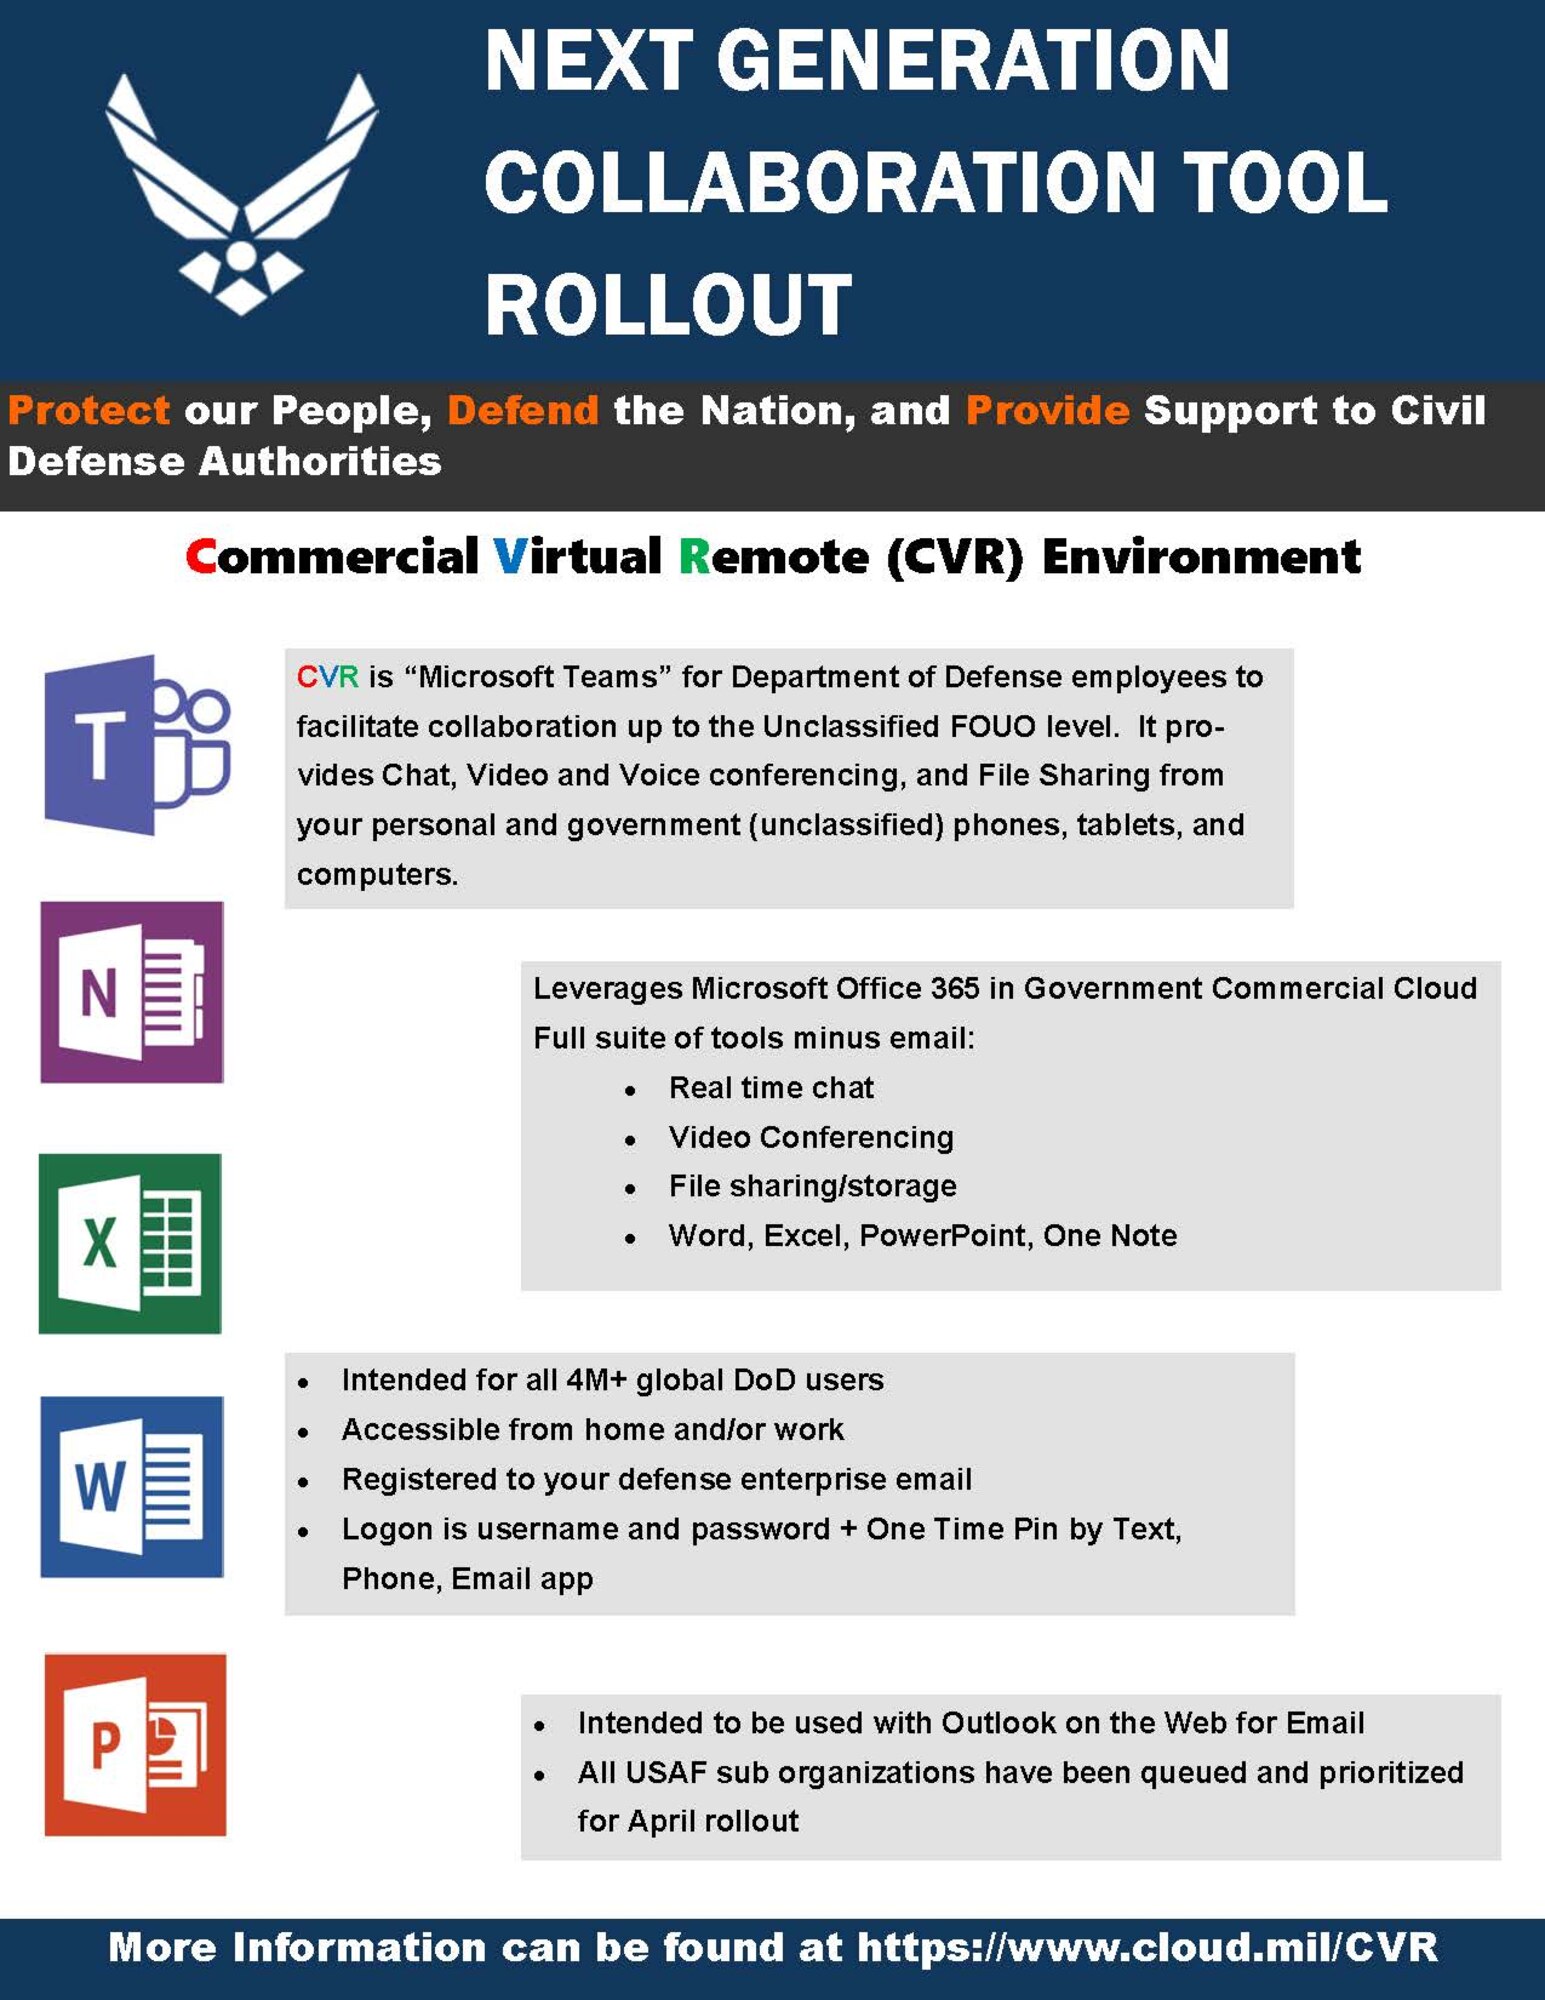 Commercial Virtual Remote Environment (CVR)